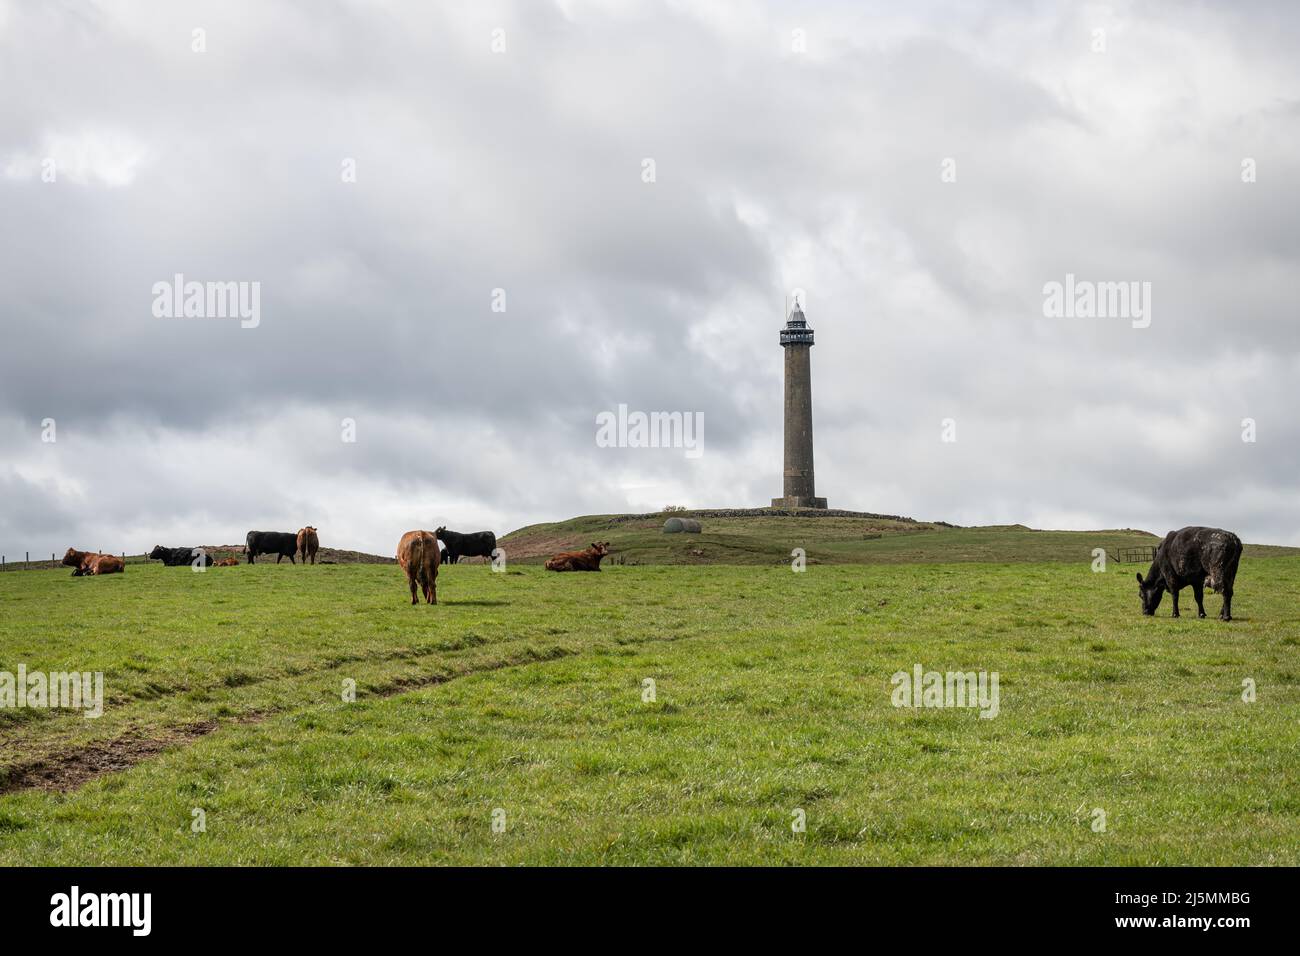 The Wellington - Waterloo Monument Tower in the Scottish borders, Jedburgh, Scotland Stock Photo